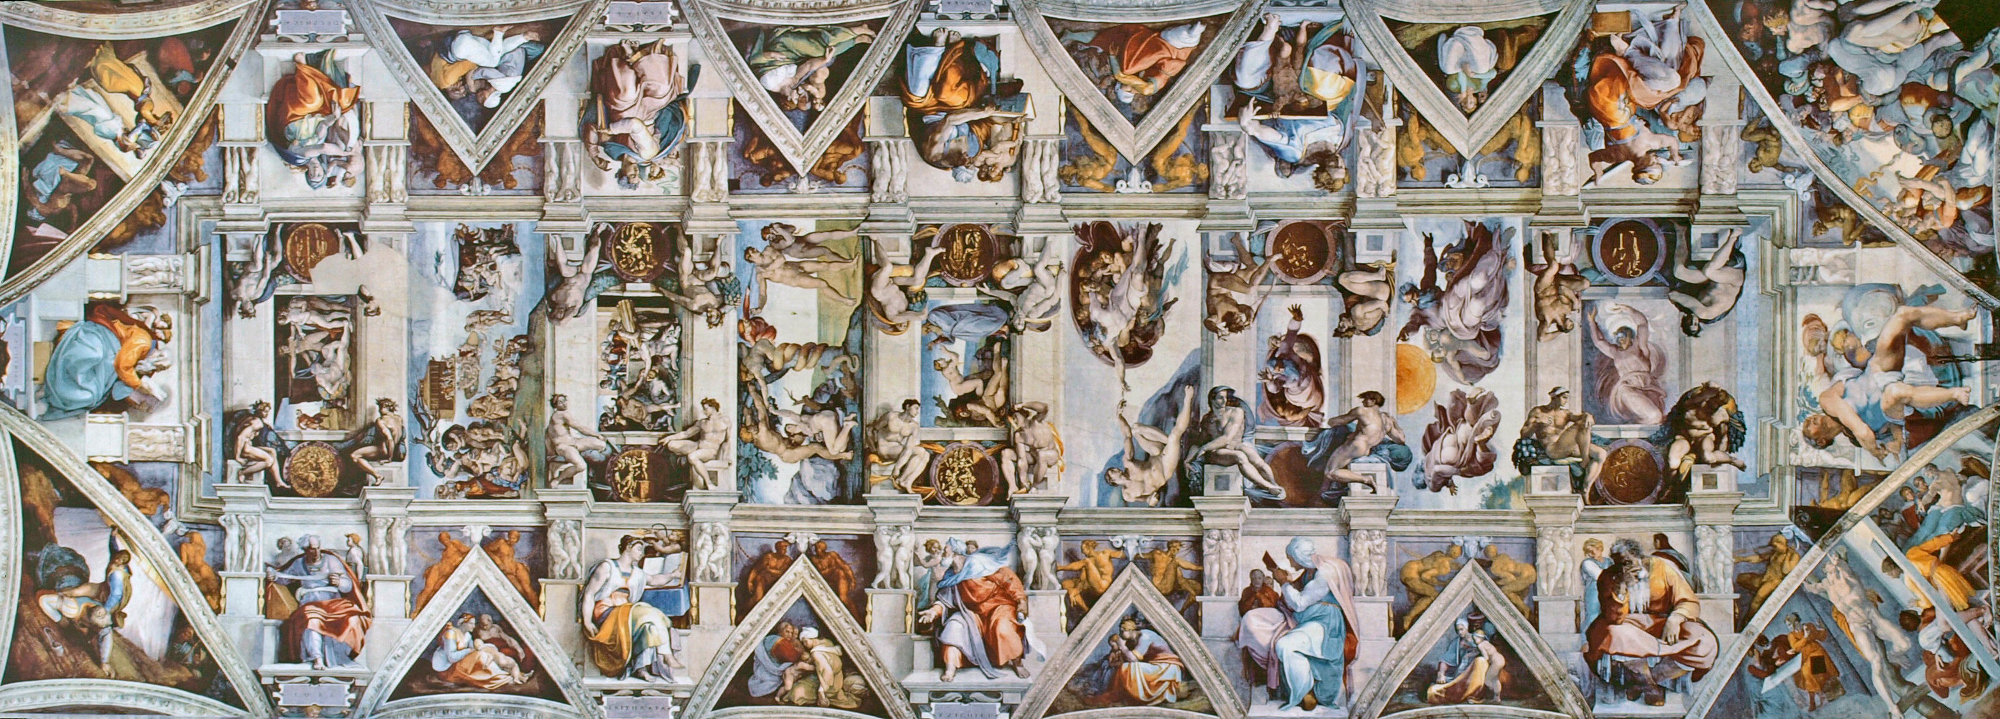 Sistine Chapel Ceiling)